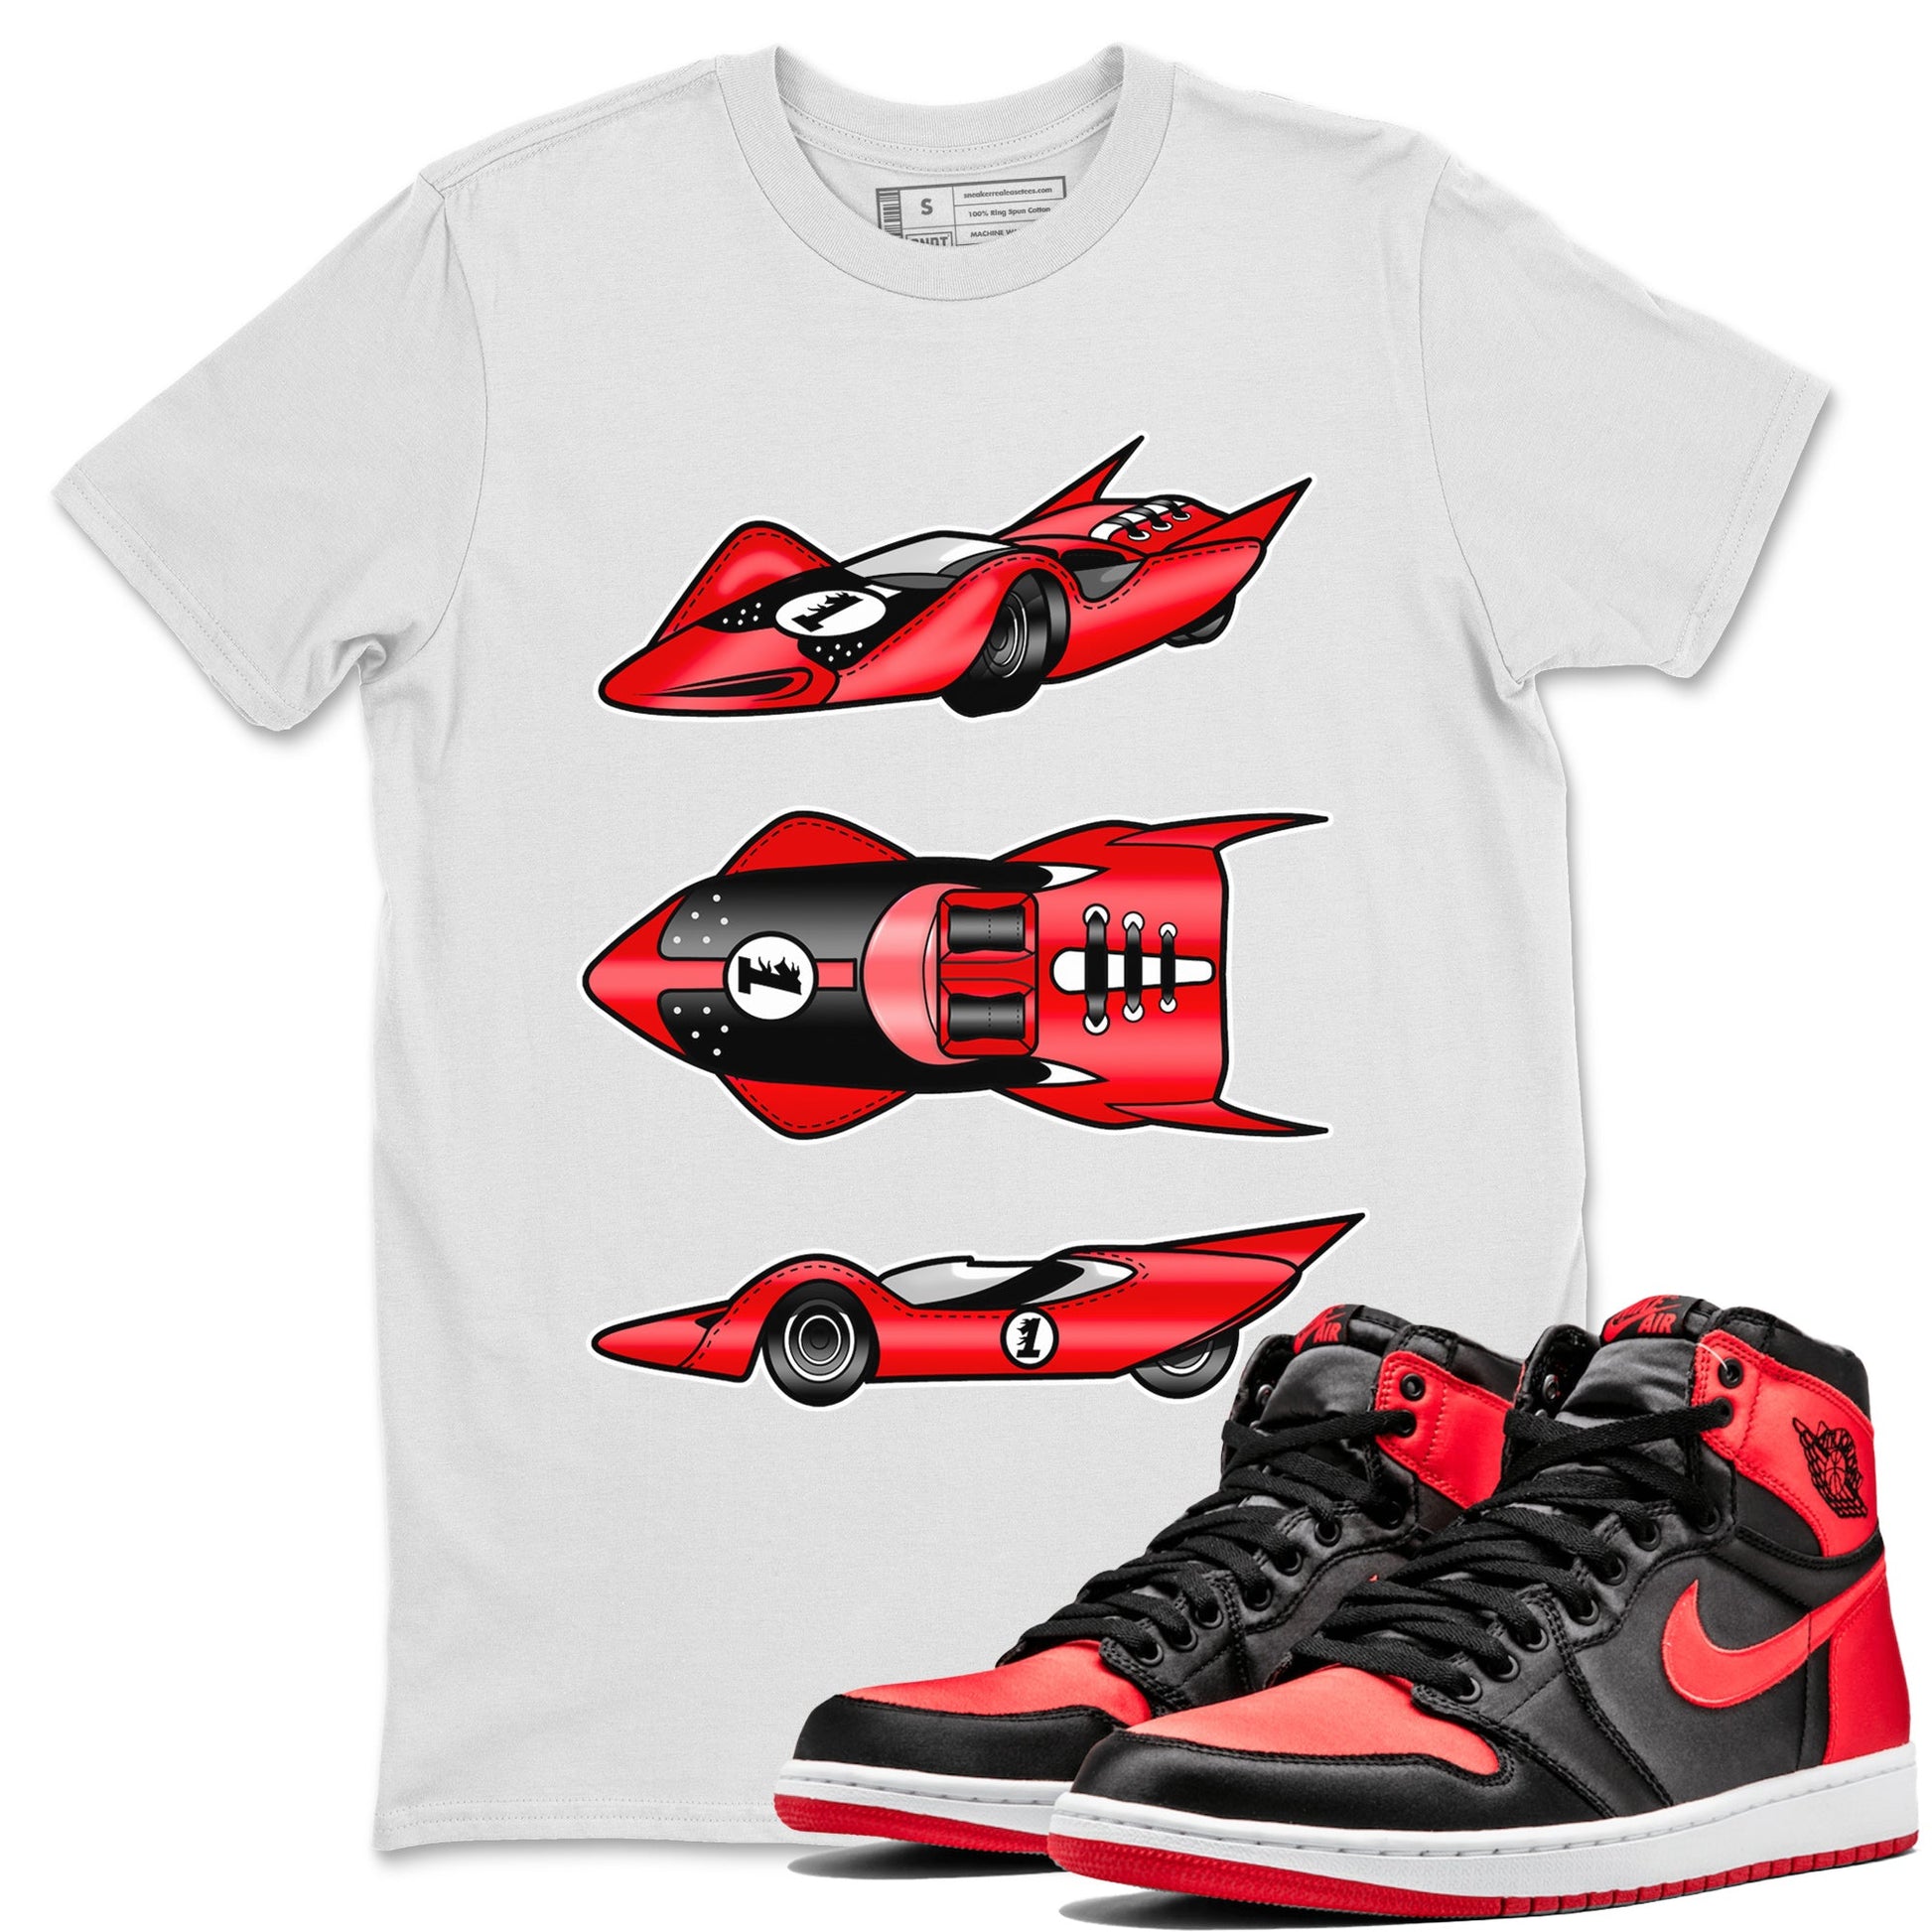 Air Jordan 1 Satin Bred Sneaker Match Tees Race Car Sneaker Tees Jordan 1 High OG Satin Bred Sneaker Release Tees Unisex Shirts White 1